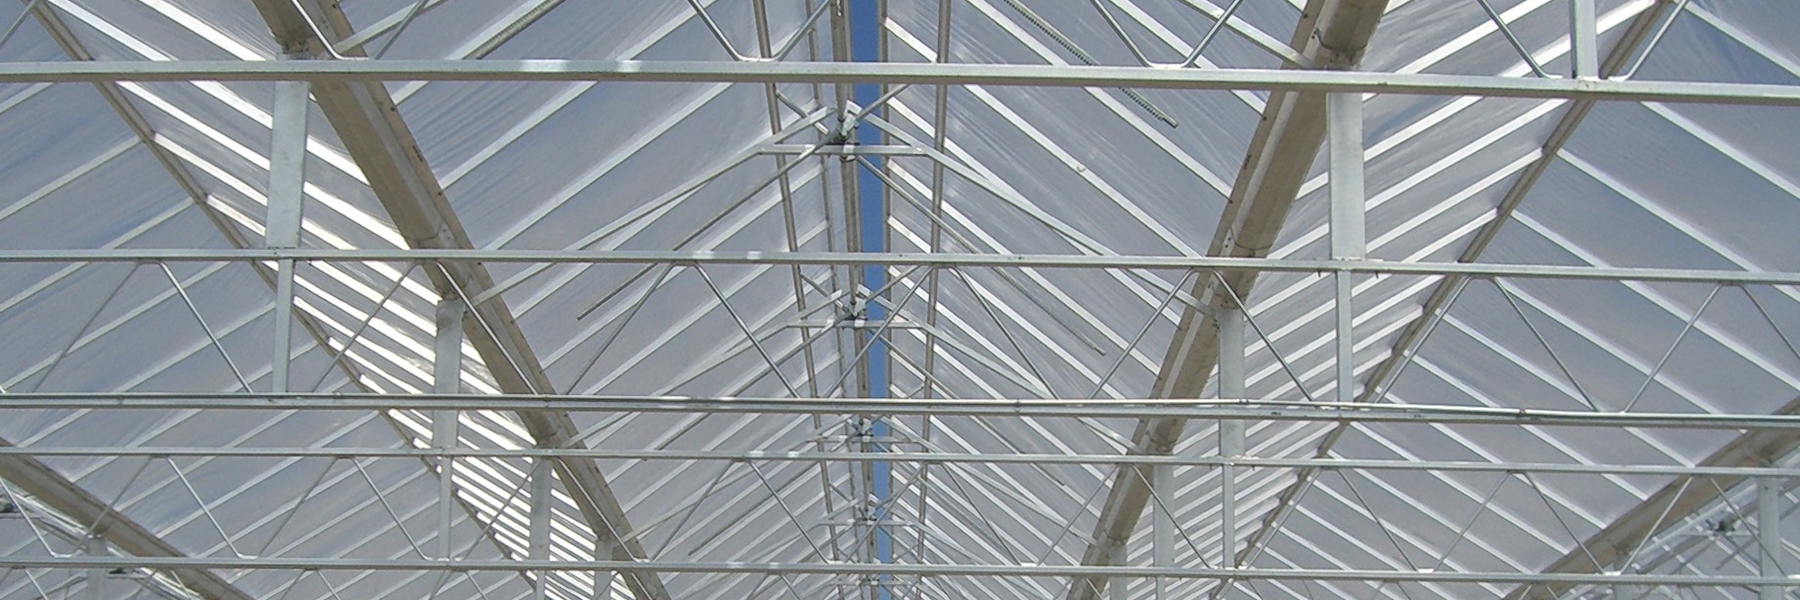 Cabrio Greenhouse Ceiling